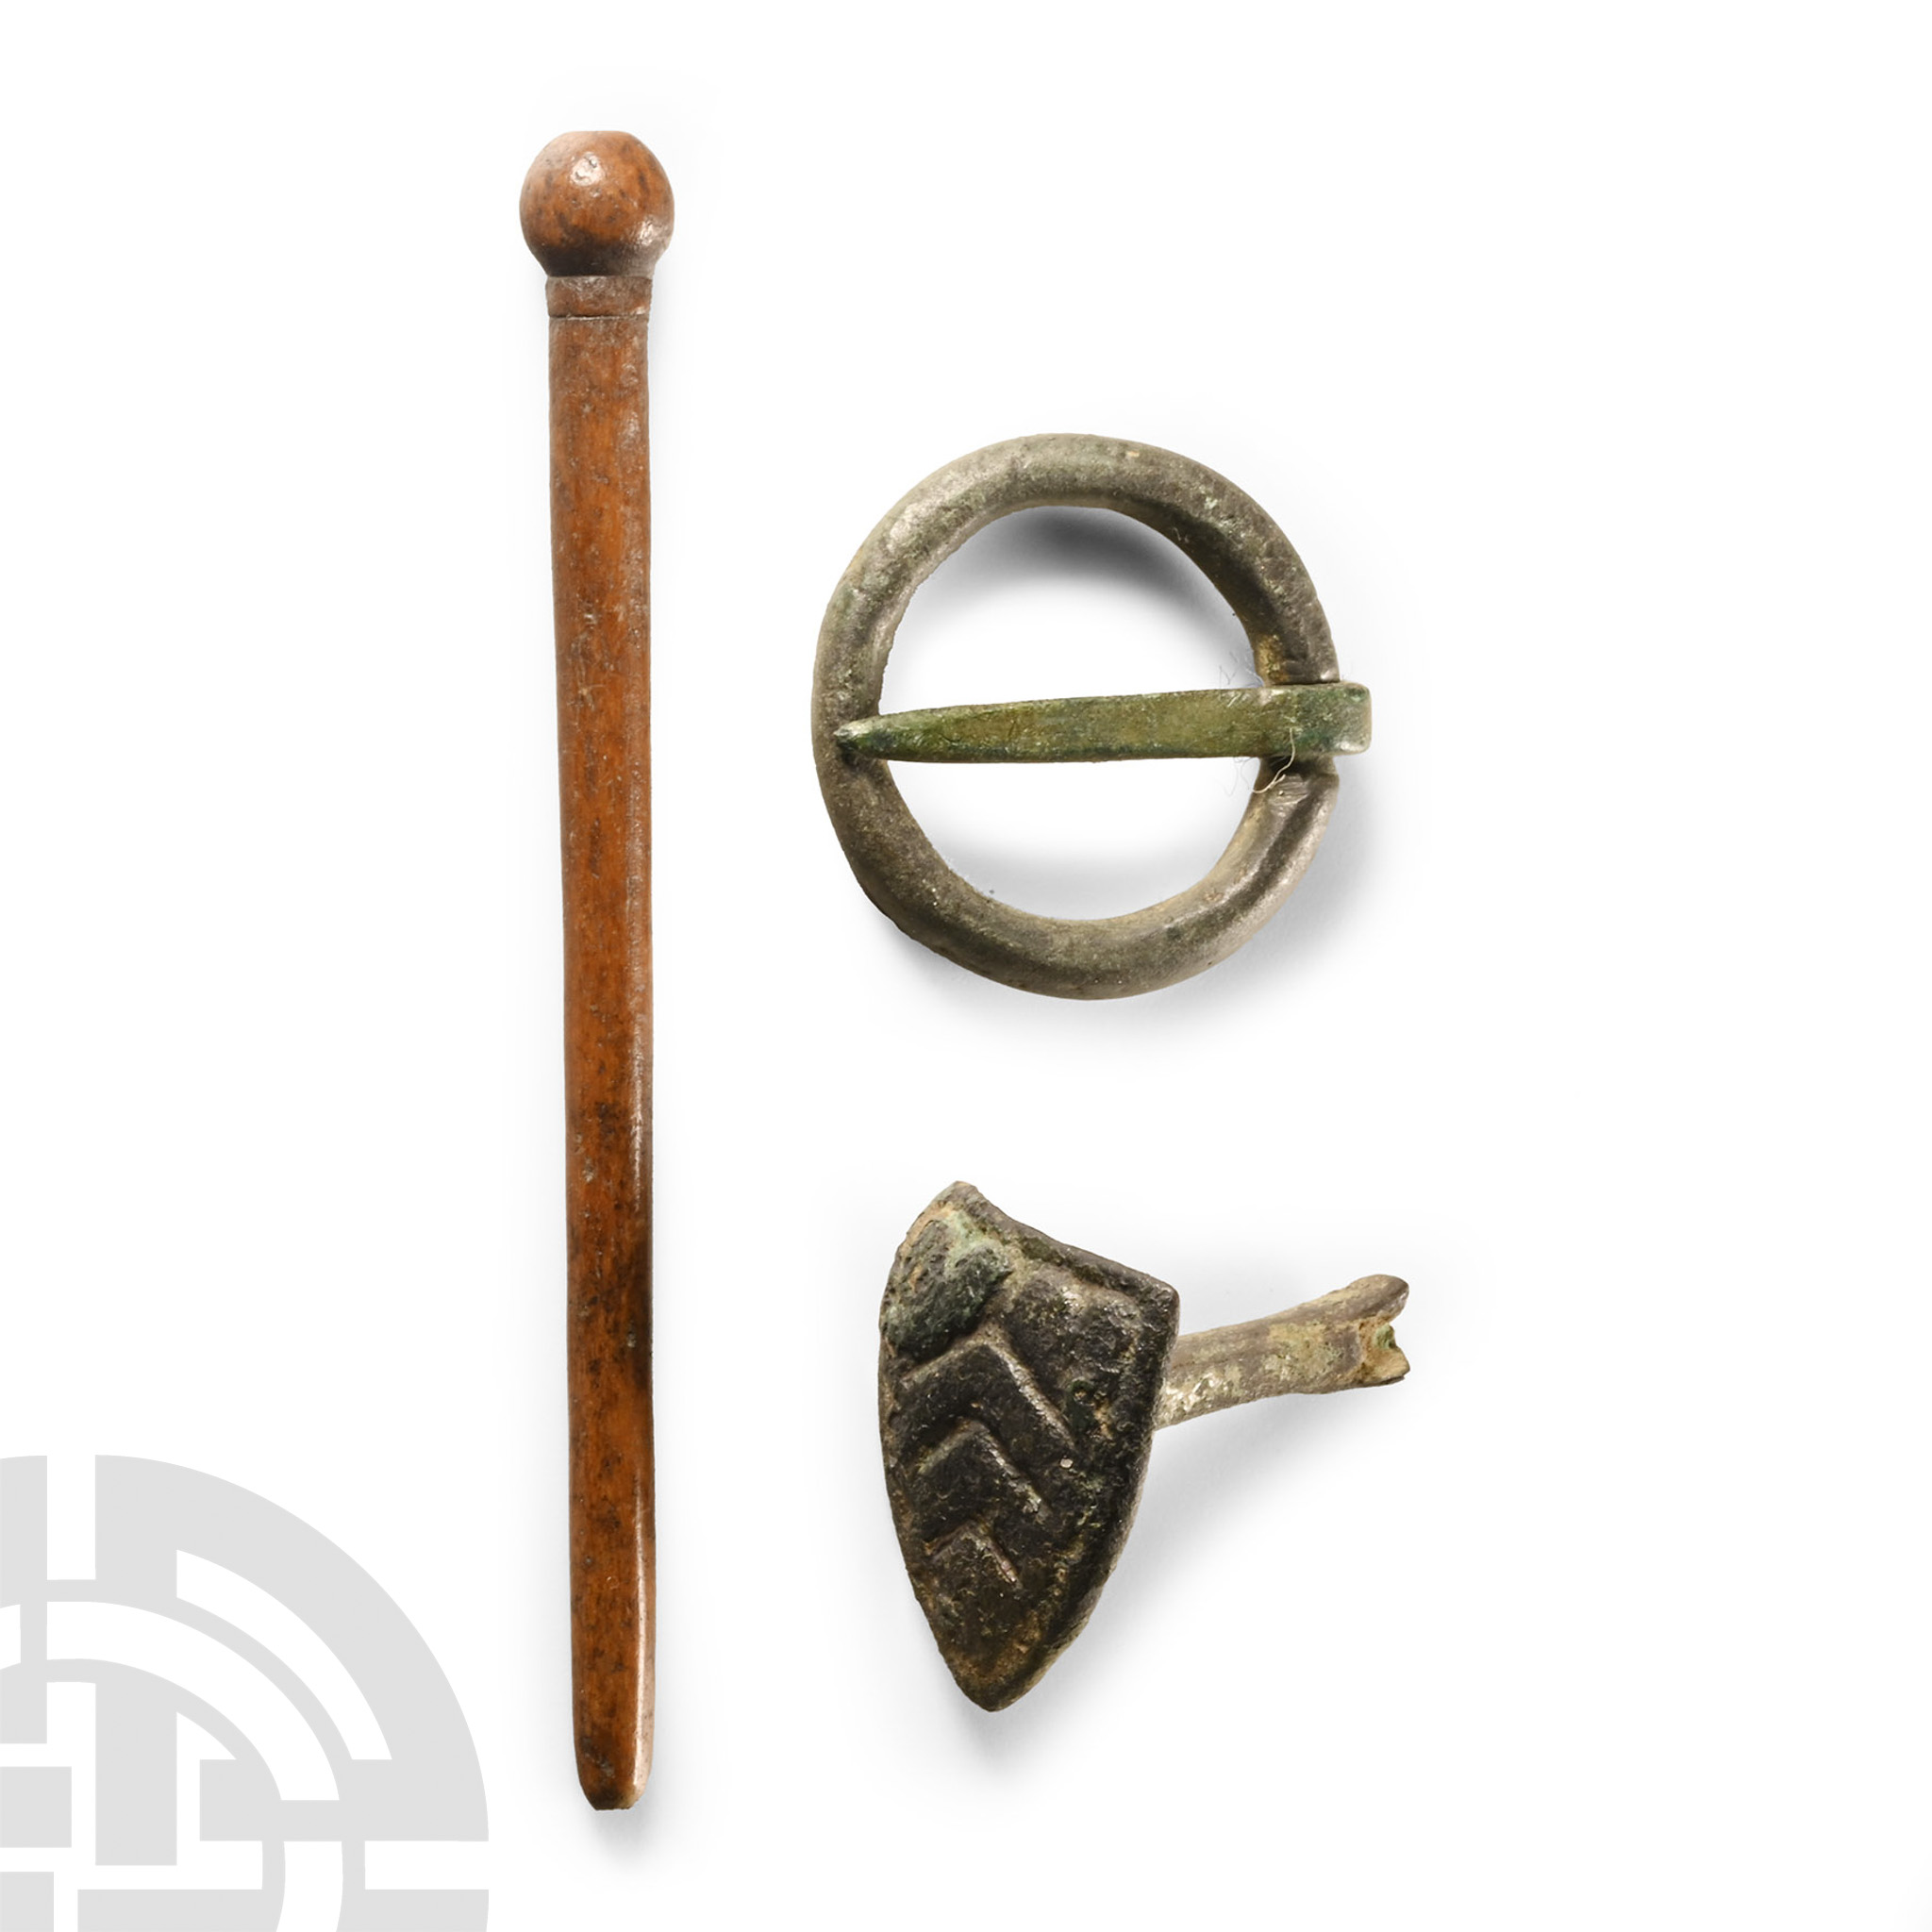 Medieval 'Essex' Artefact Group